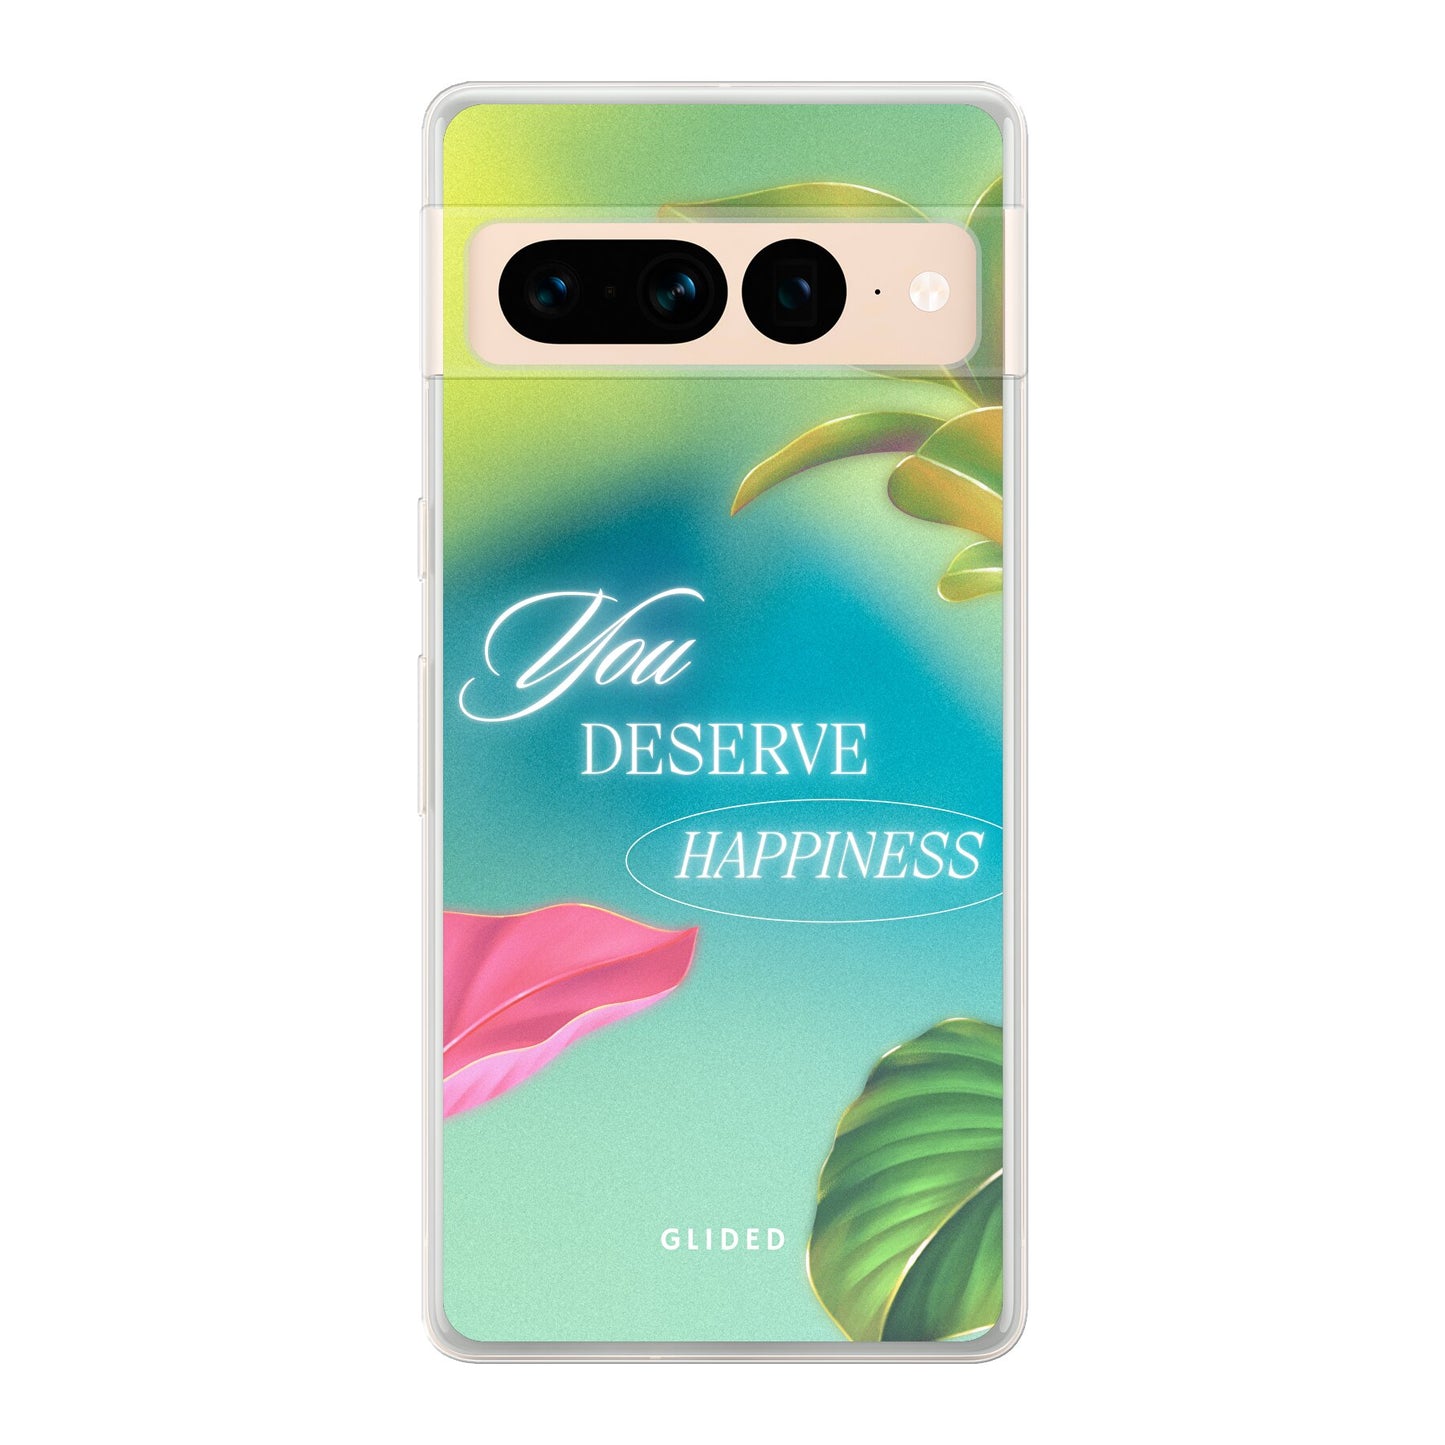 Happiness - Google Pixel 7 Pro - Soft case